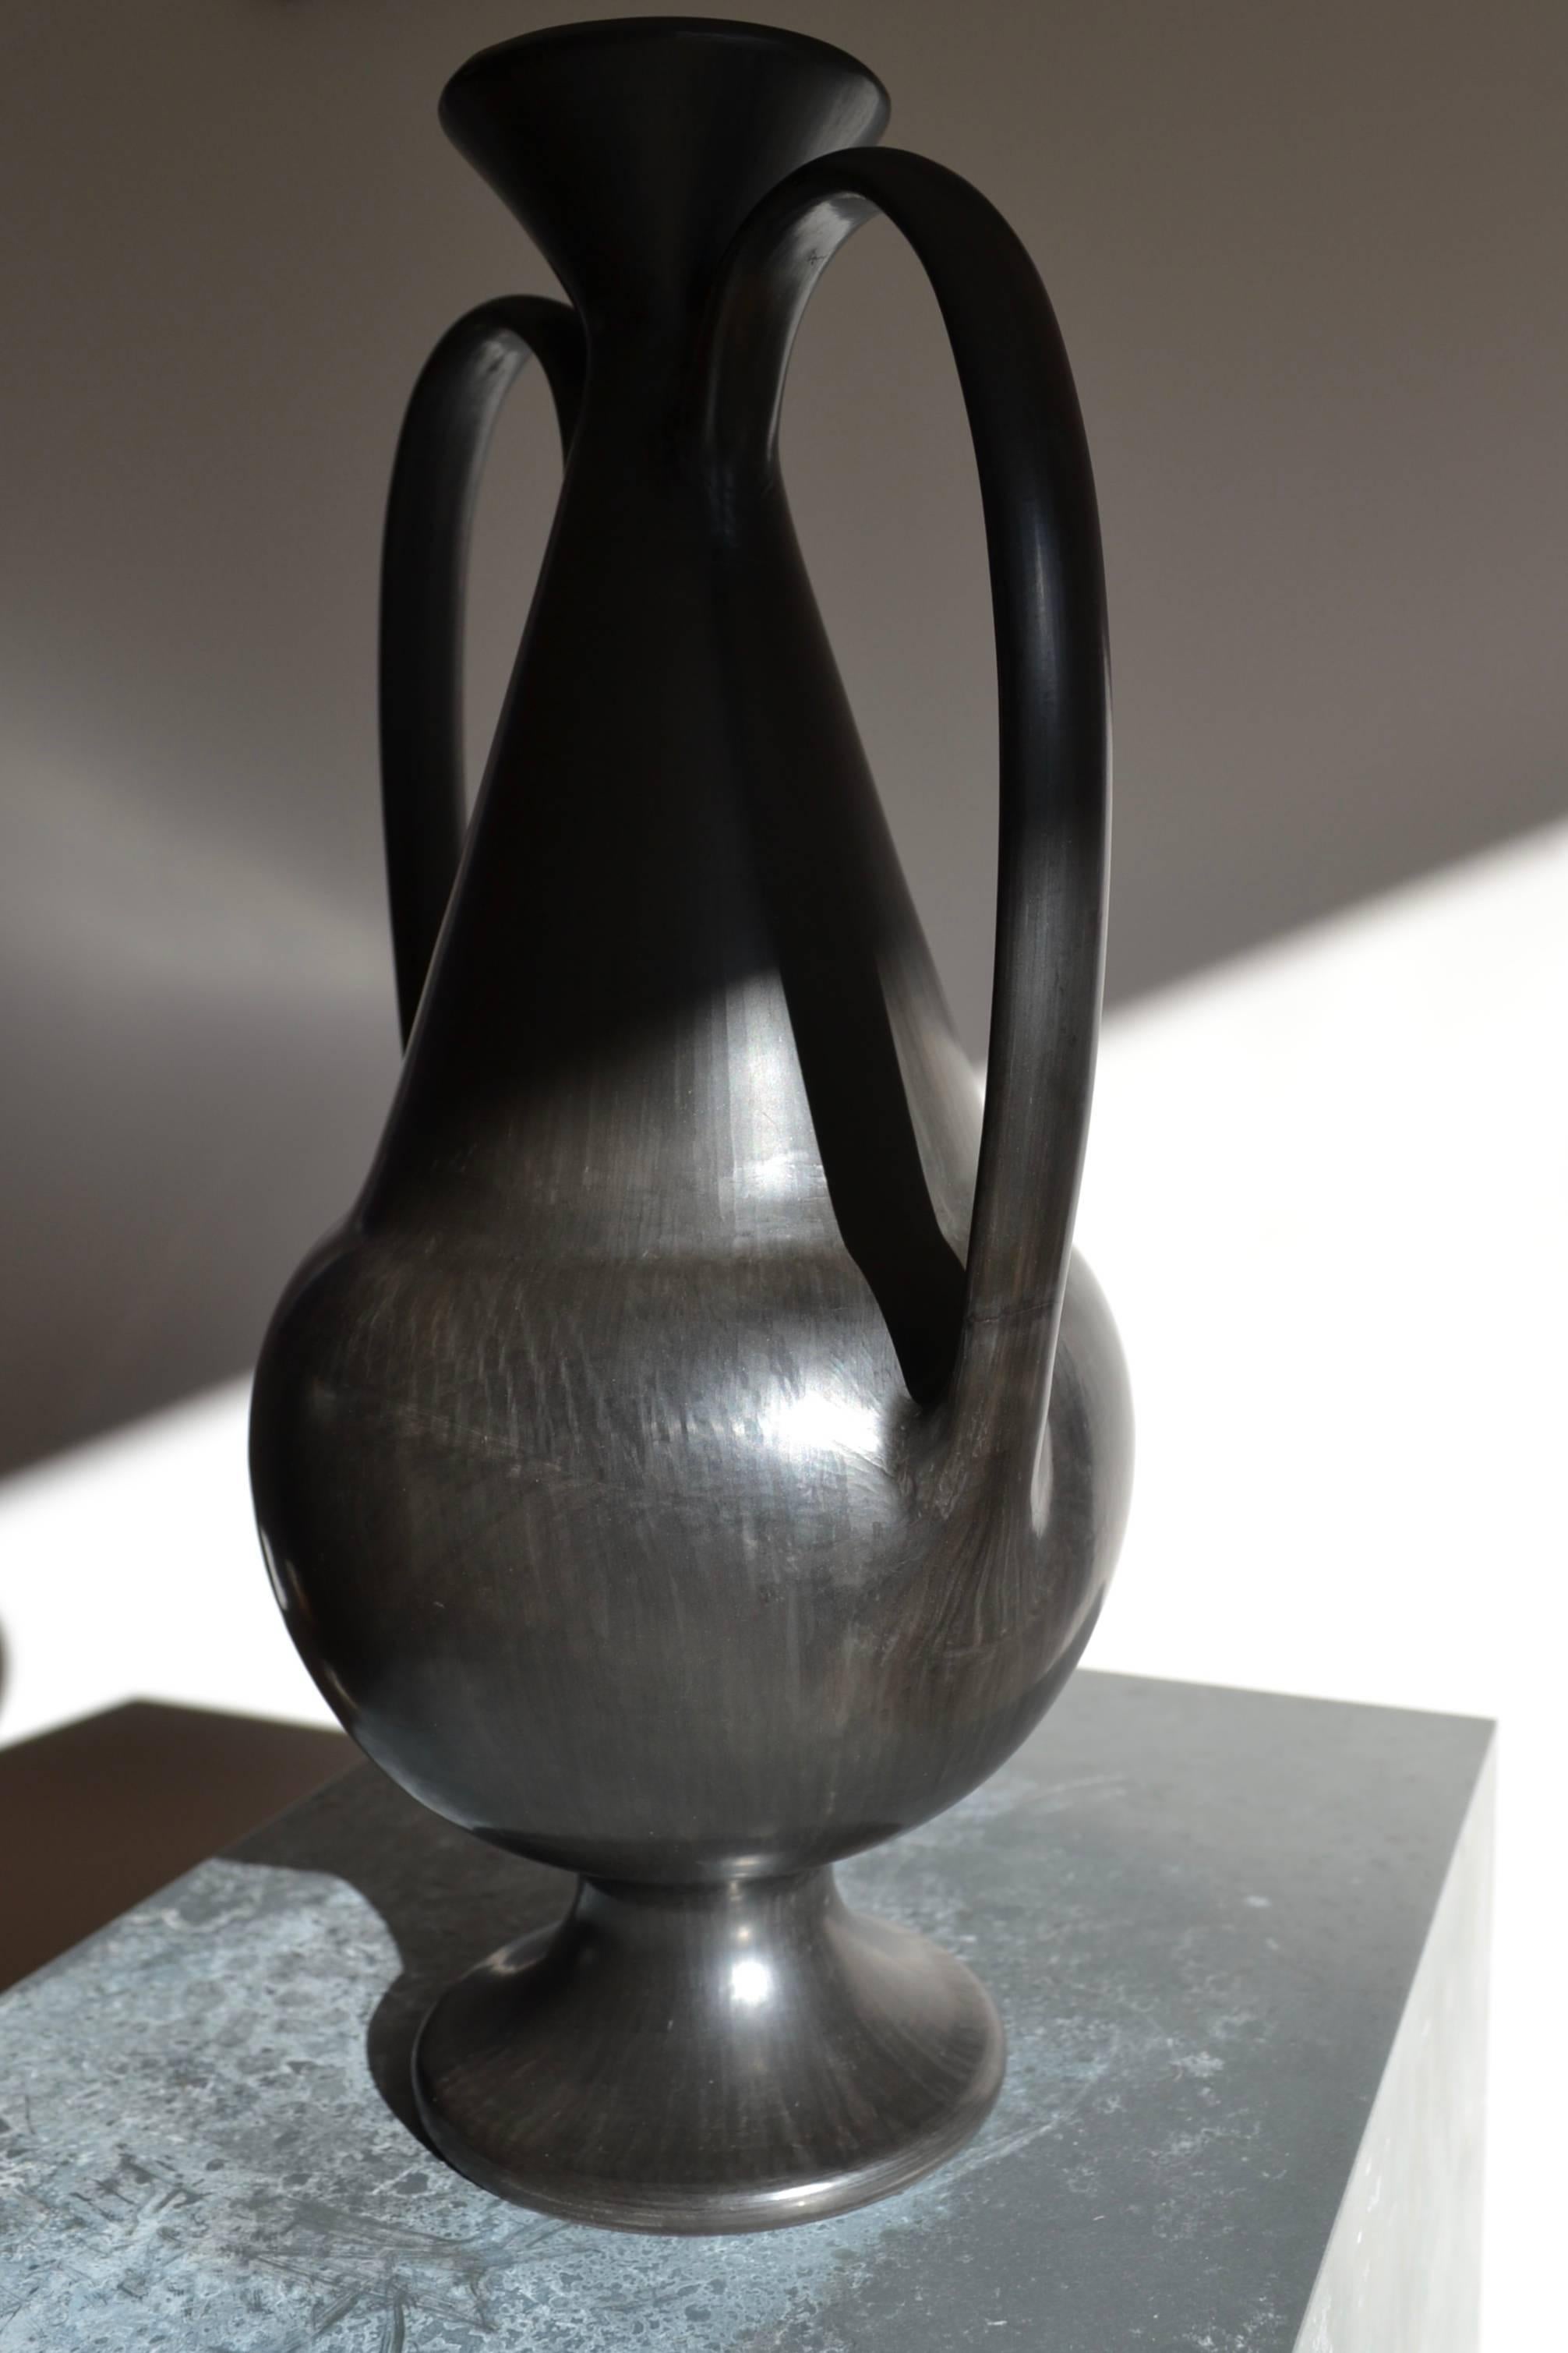 Fired 1950s Bucchero Vase by Gio Ponti